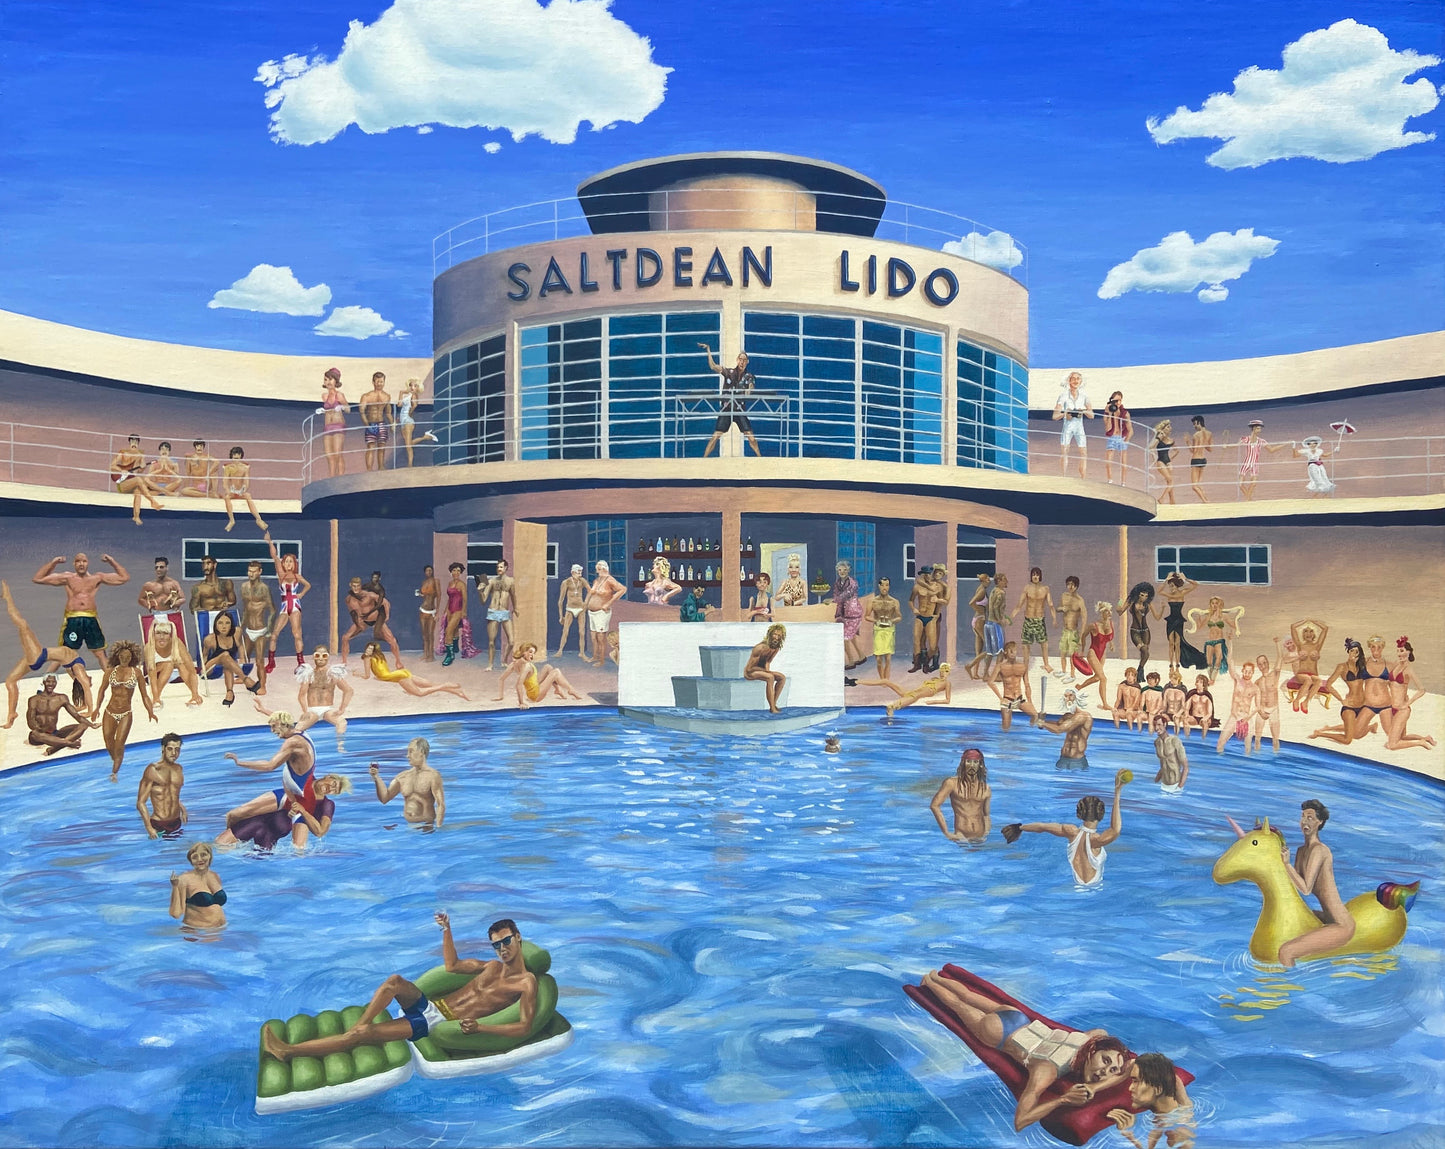 Brighton Summer Time: Saltdean Lido